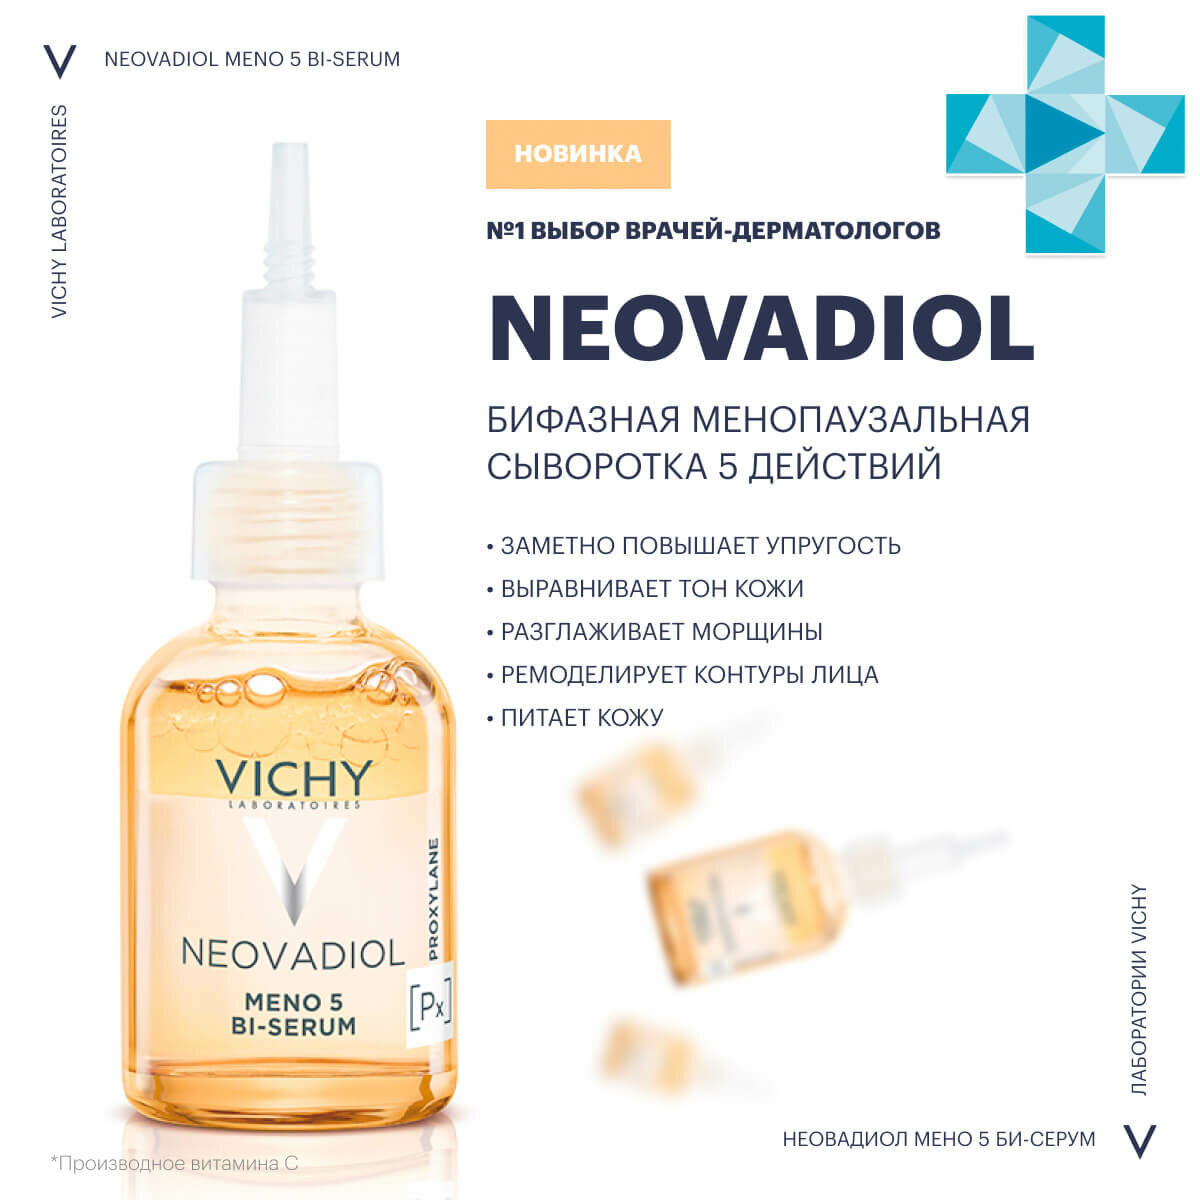 VICHY Neovadiol Бифазная Менопаузальная сыворотка 5 действий, 30 мл, VICHY